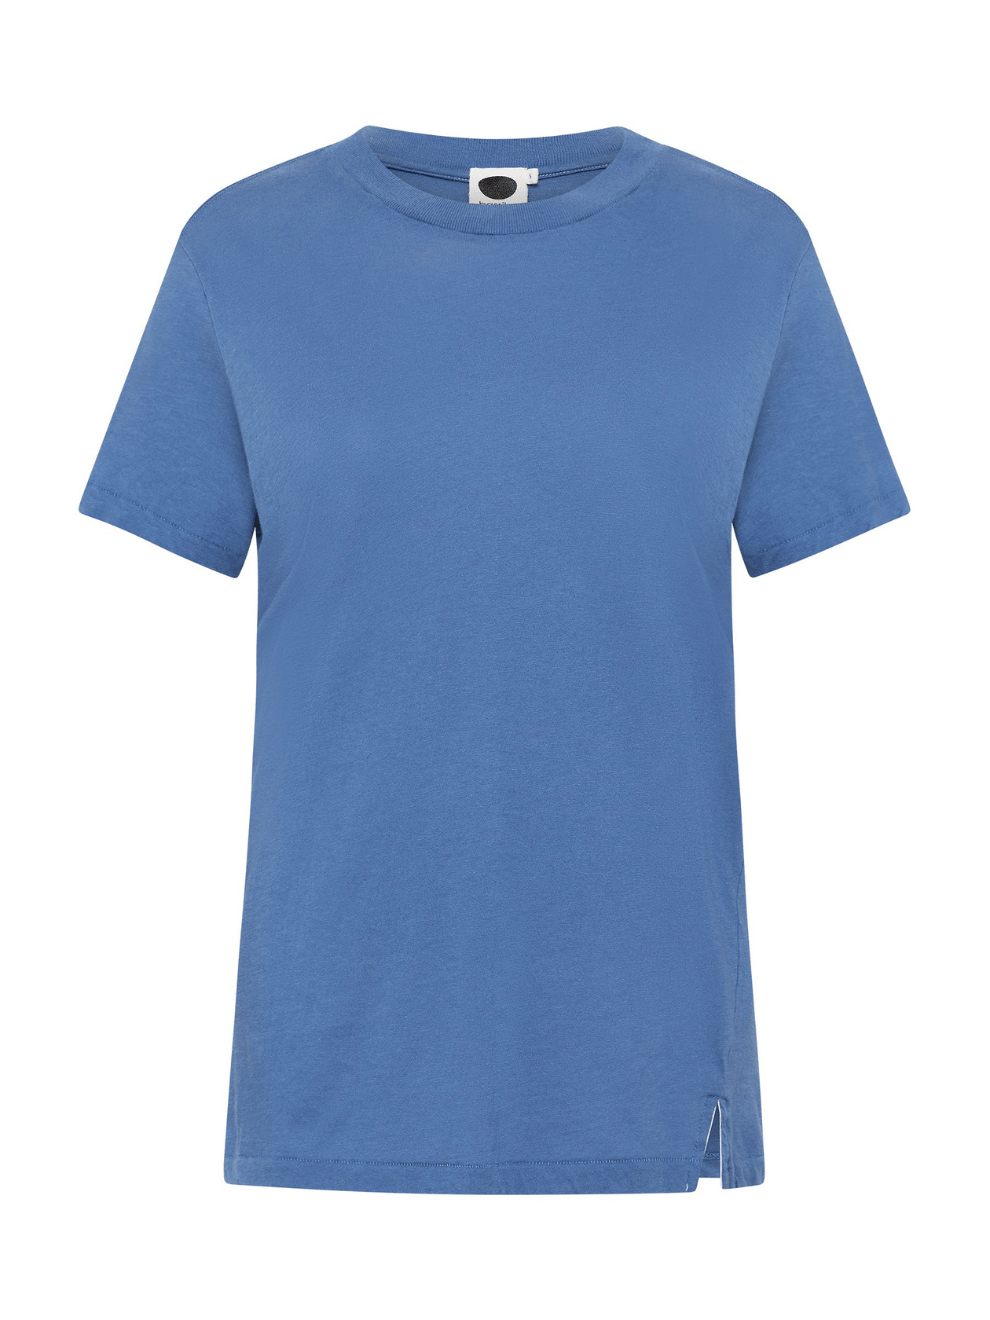 Regular Classic T-Shirt in Dutch Blue